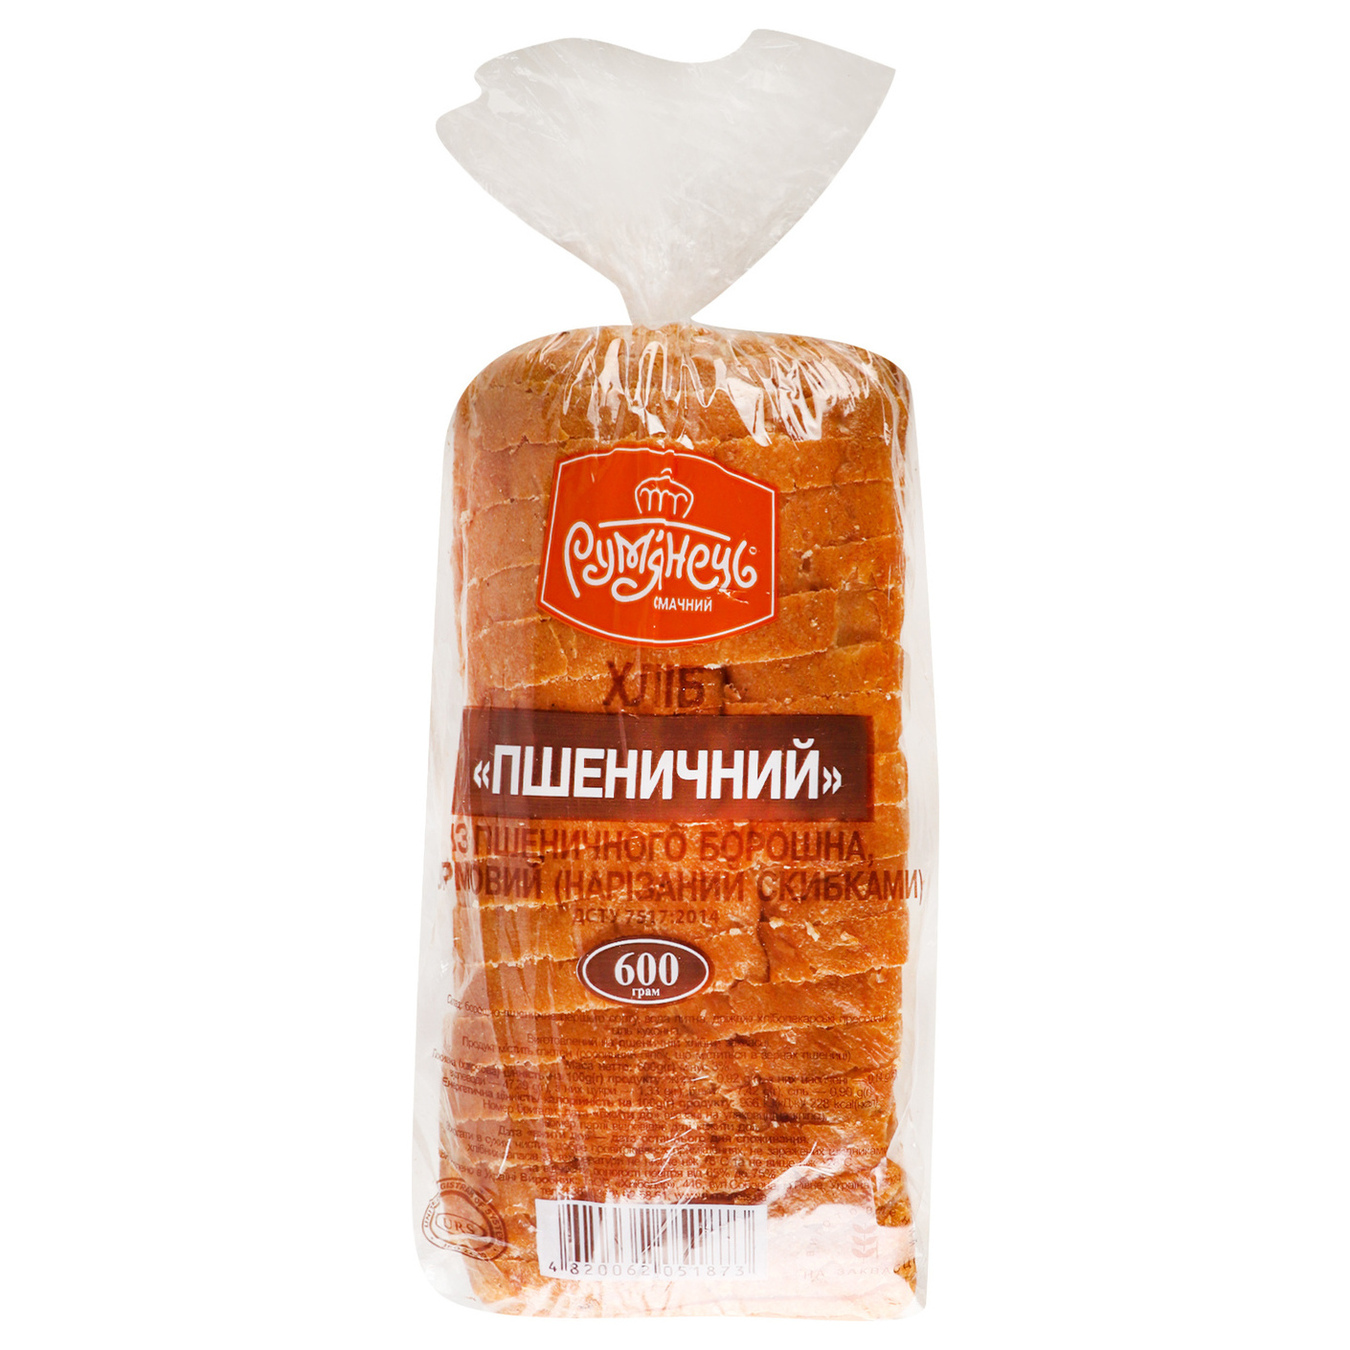 Rumyanets Wheat sliced Bread 600g 2